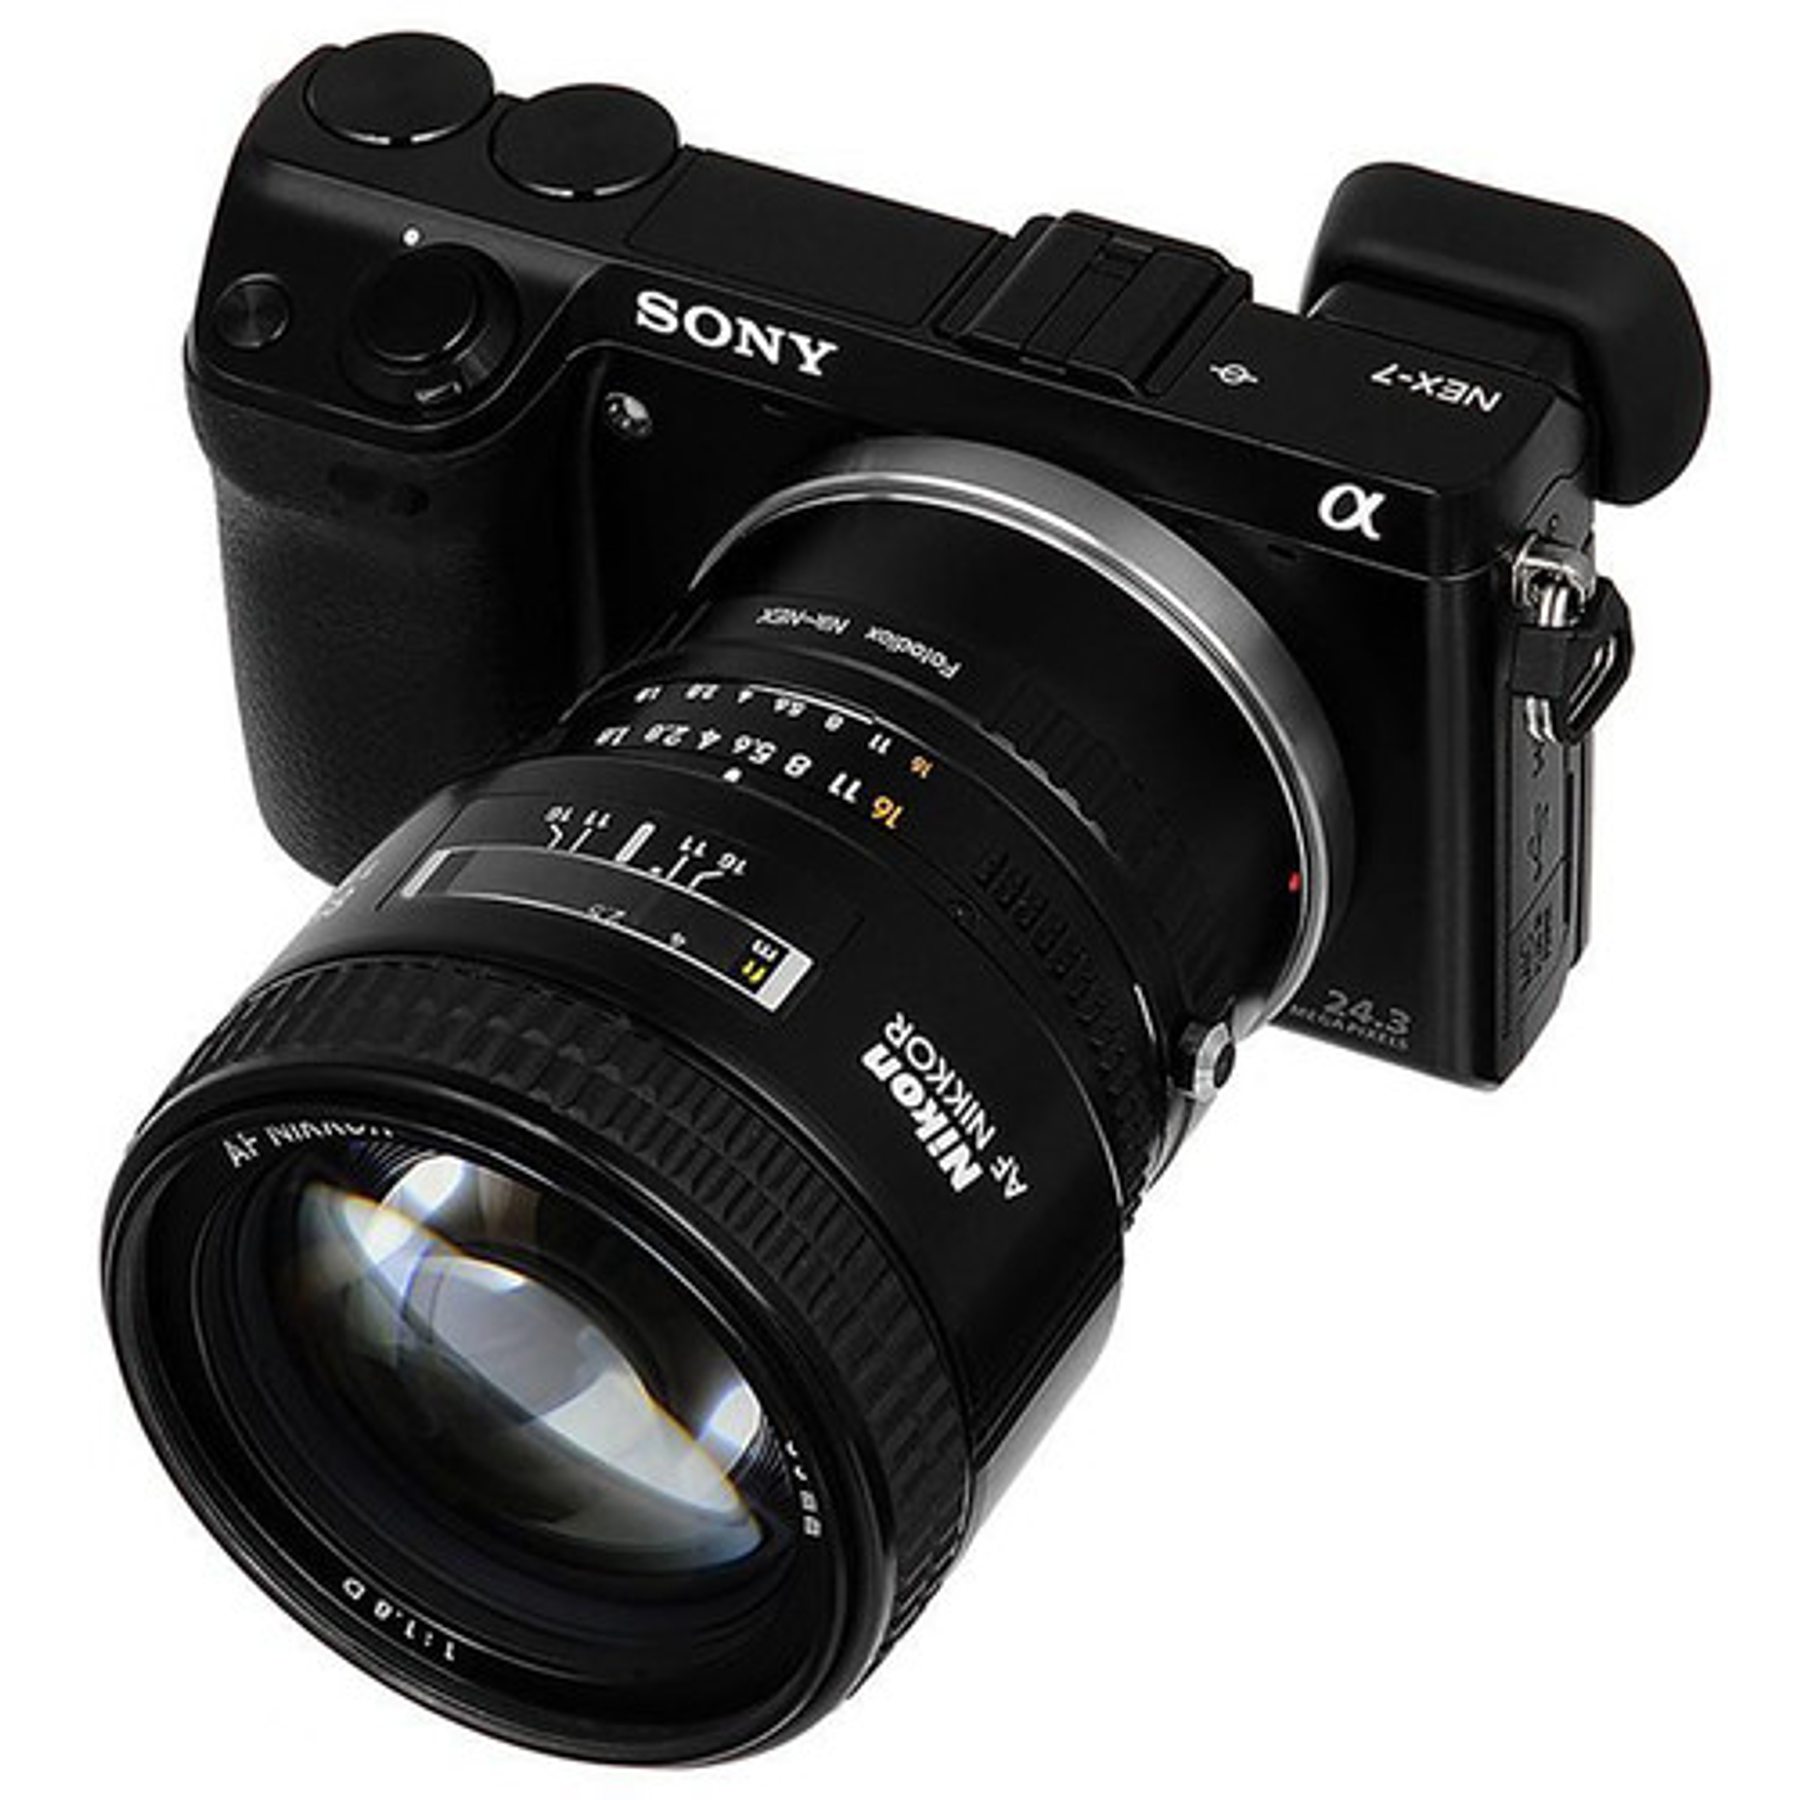 Fotodiox Nikon F to Sony E MF